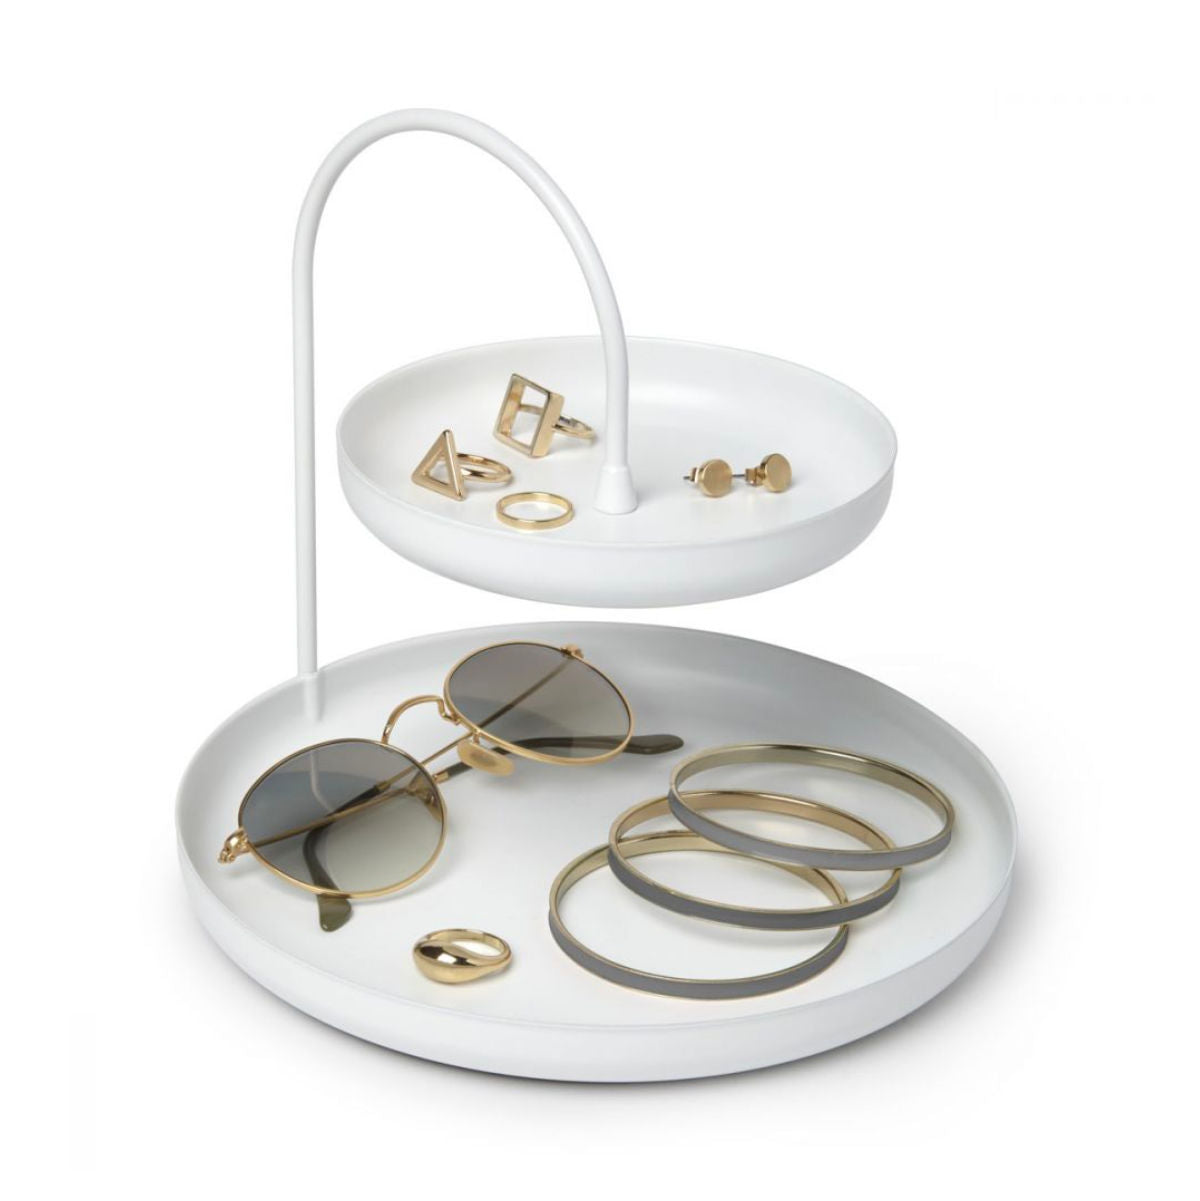 Umbra Poise accessory tray, white